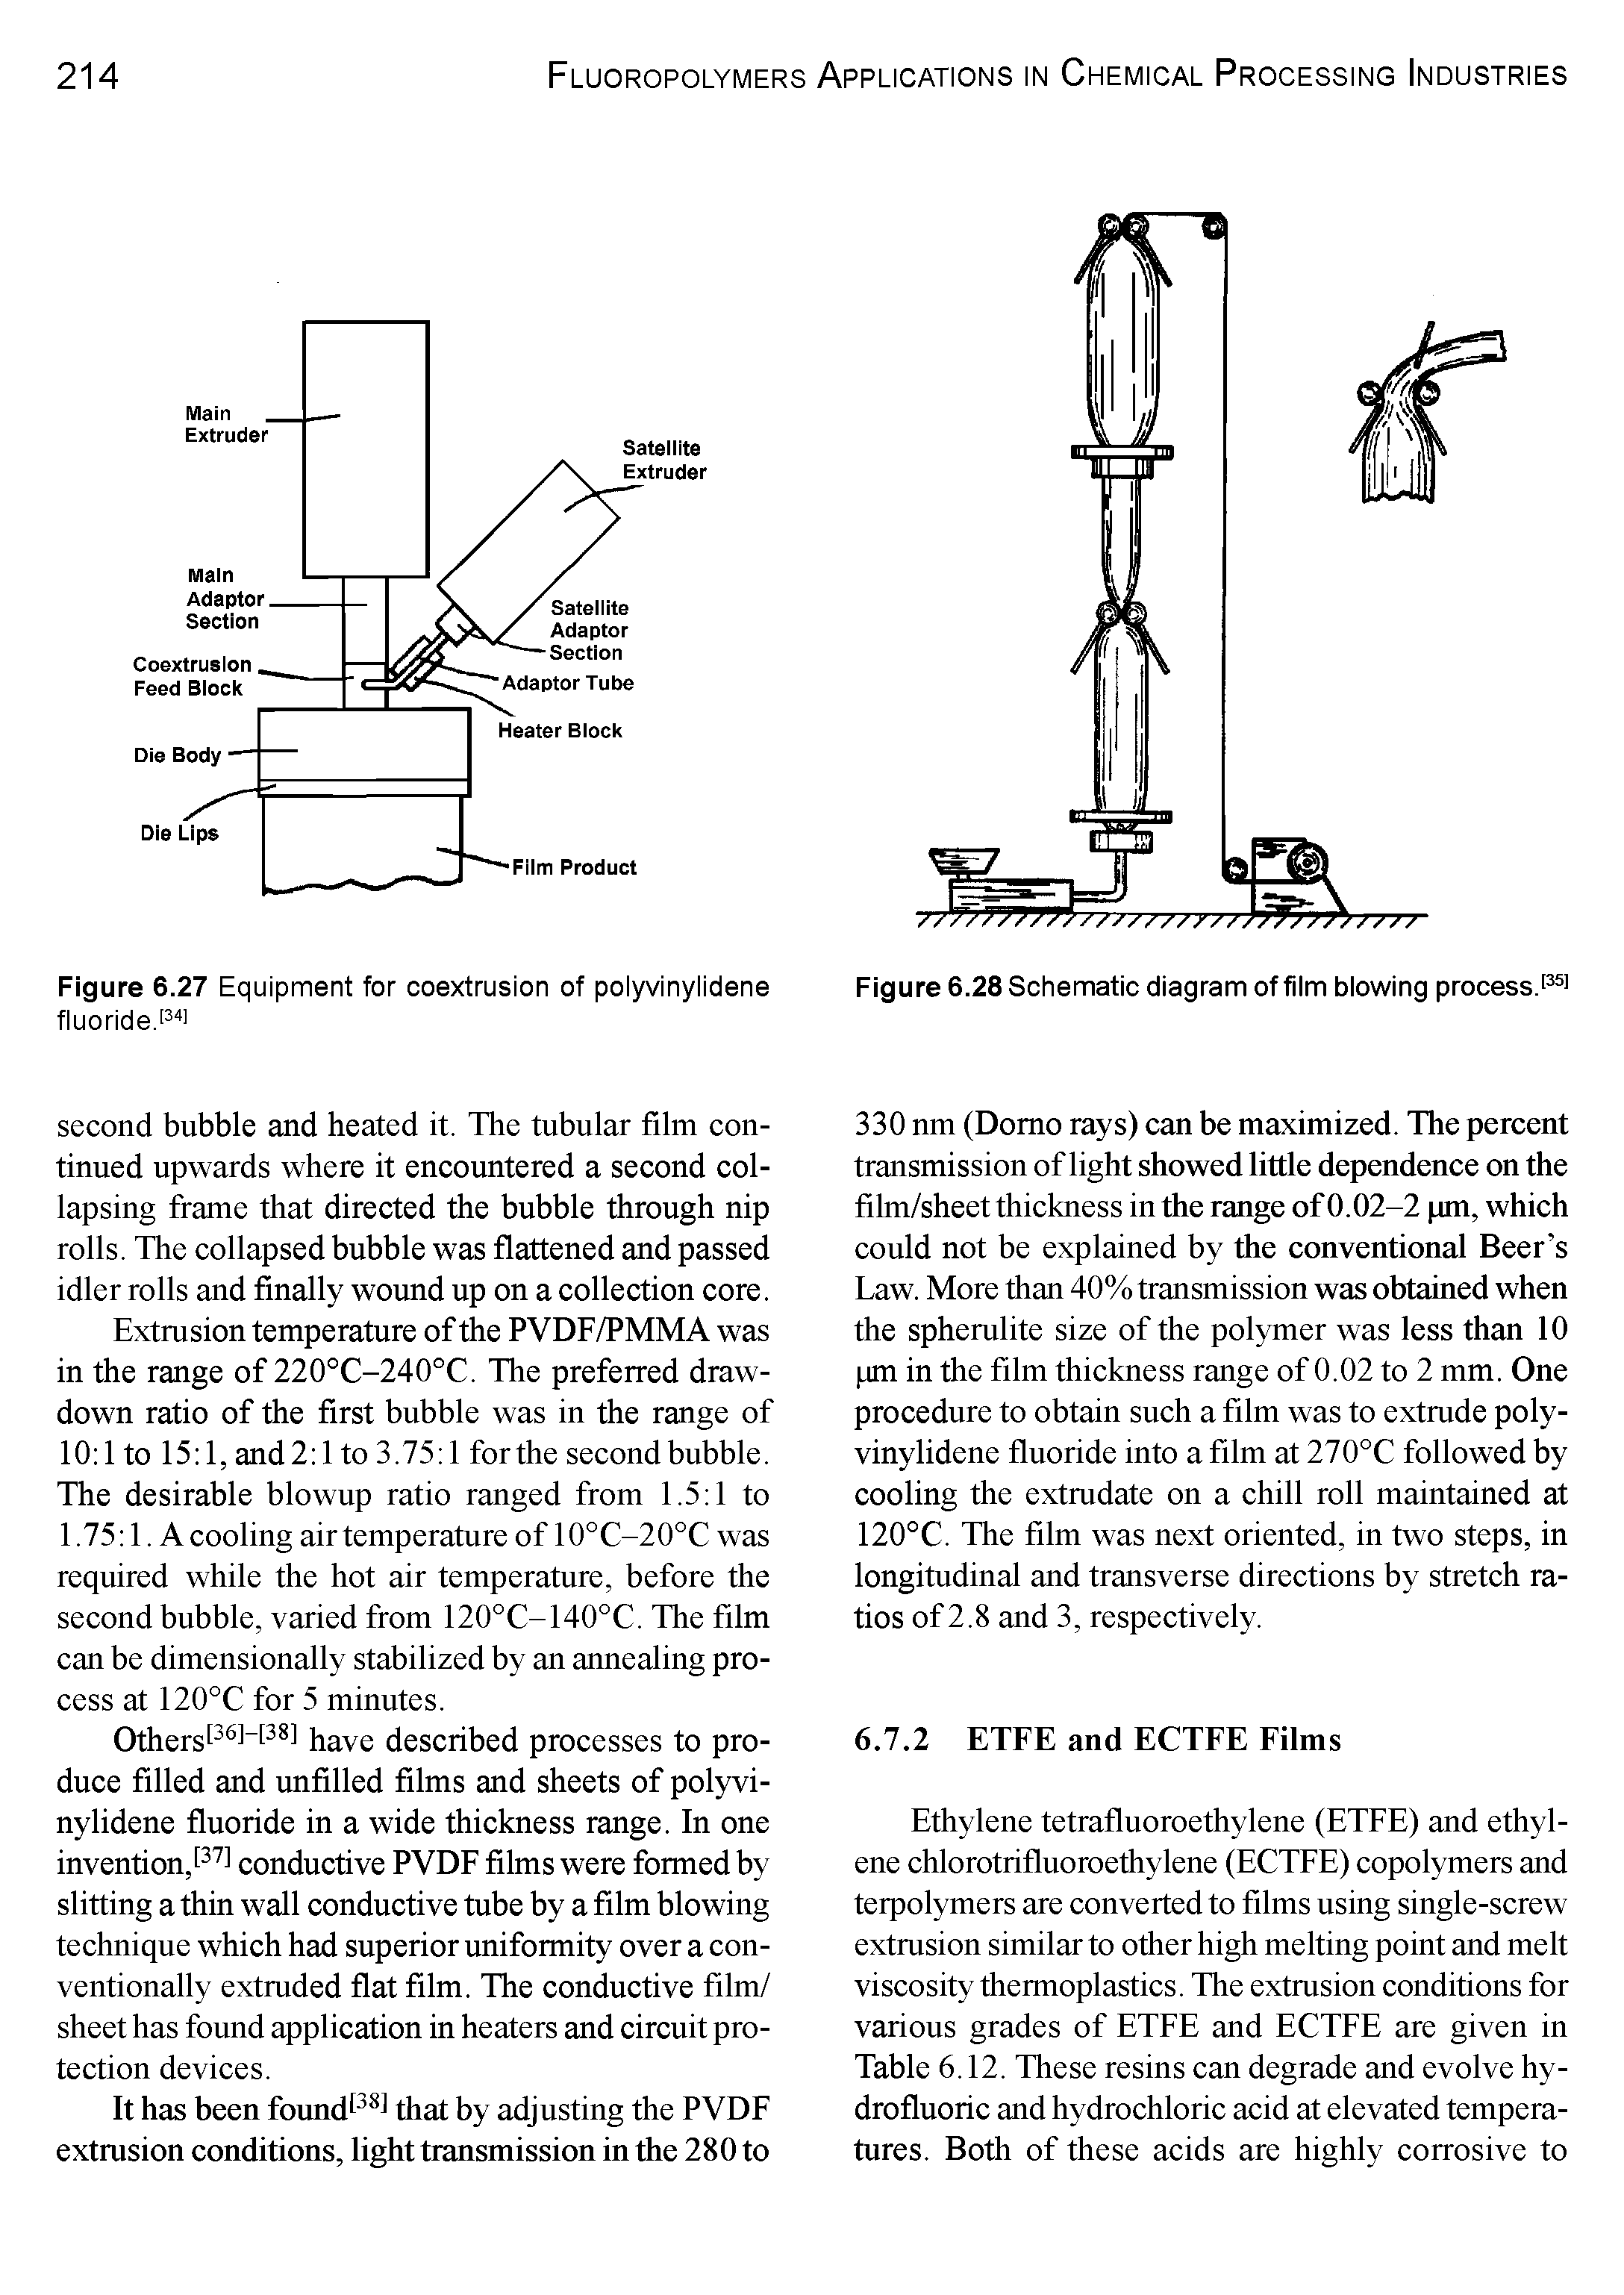 Figure 6.28 Schematic diagram of film blowing process...